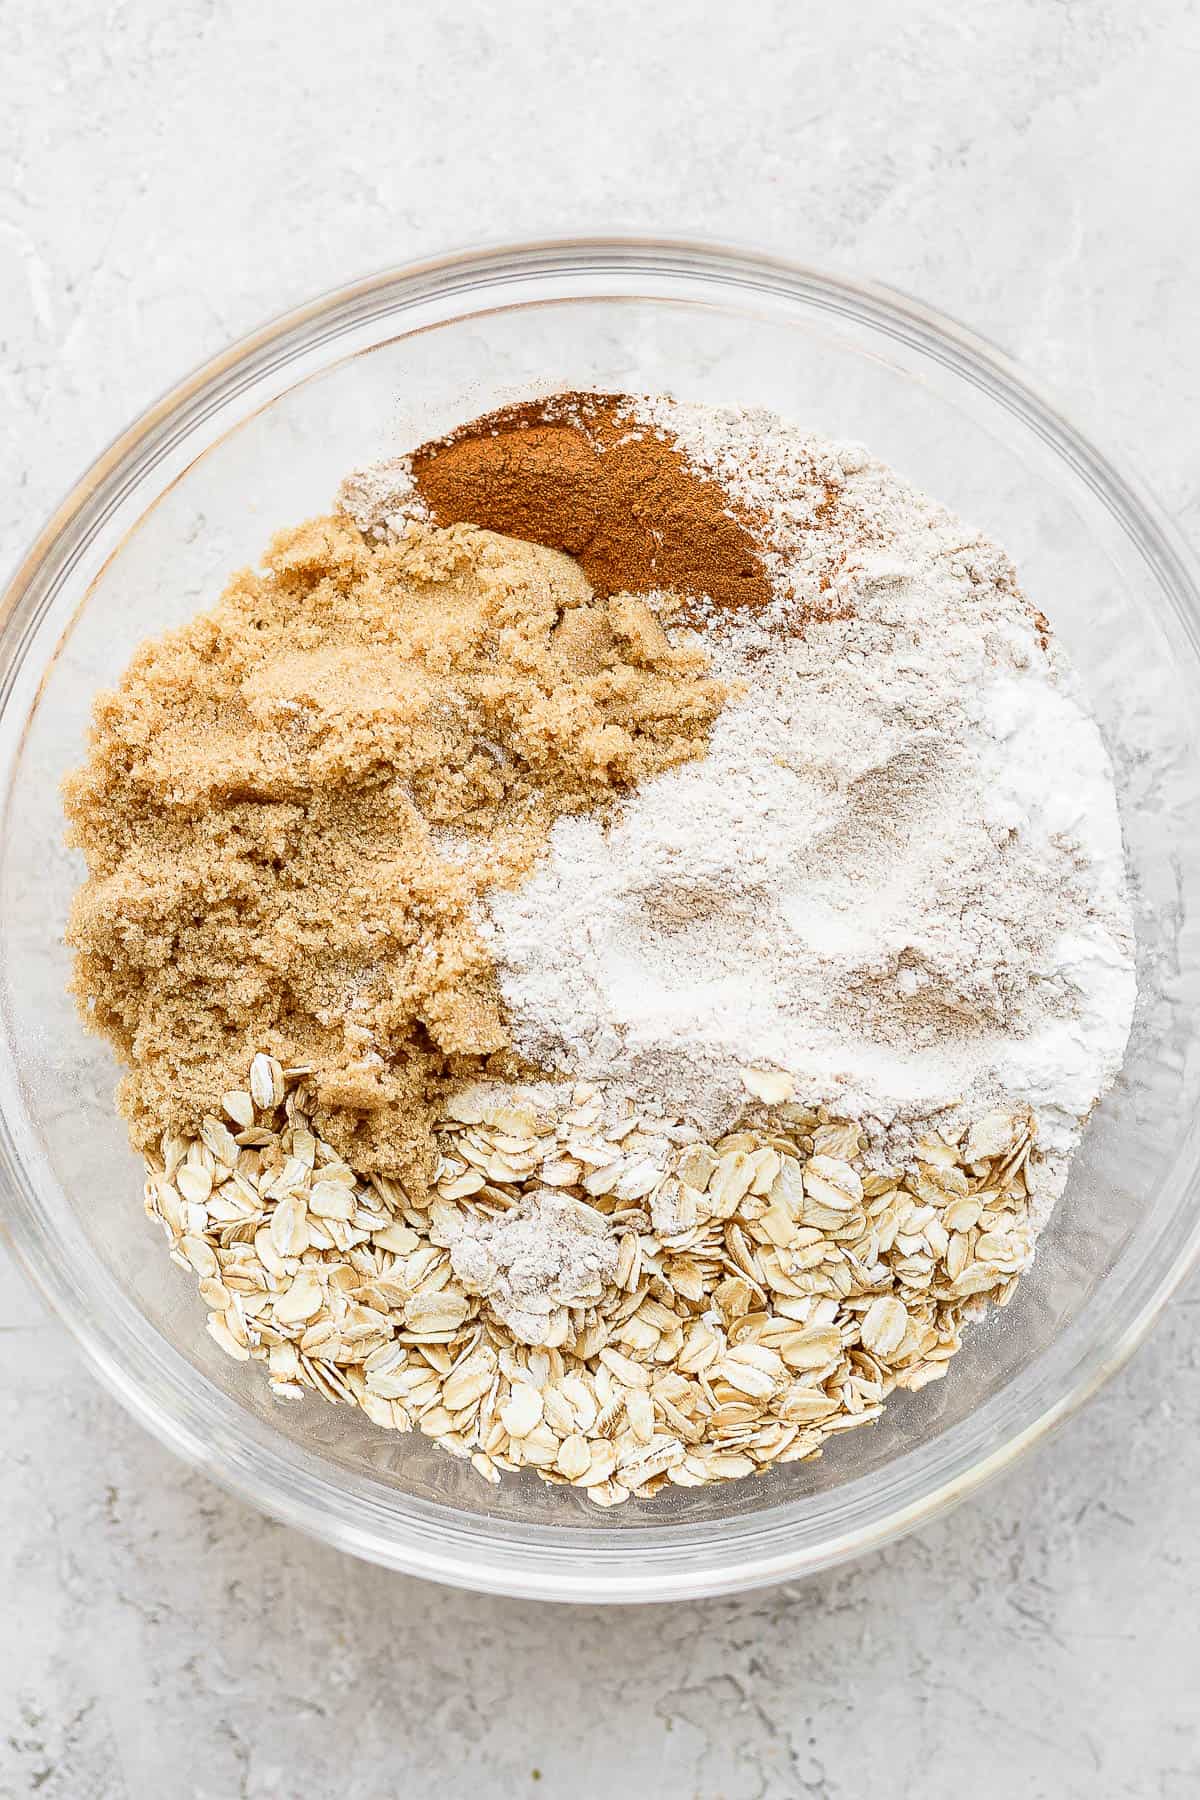 Flour, rolled oats, baking soda, baking powder, salt, brown sugar and cinnamon in a bowl.